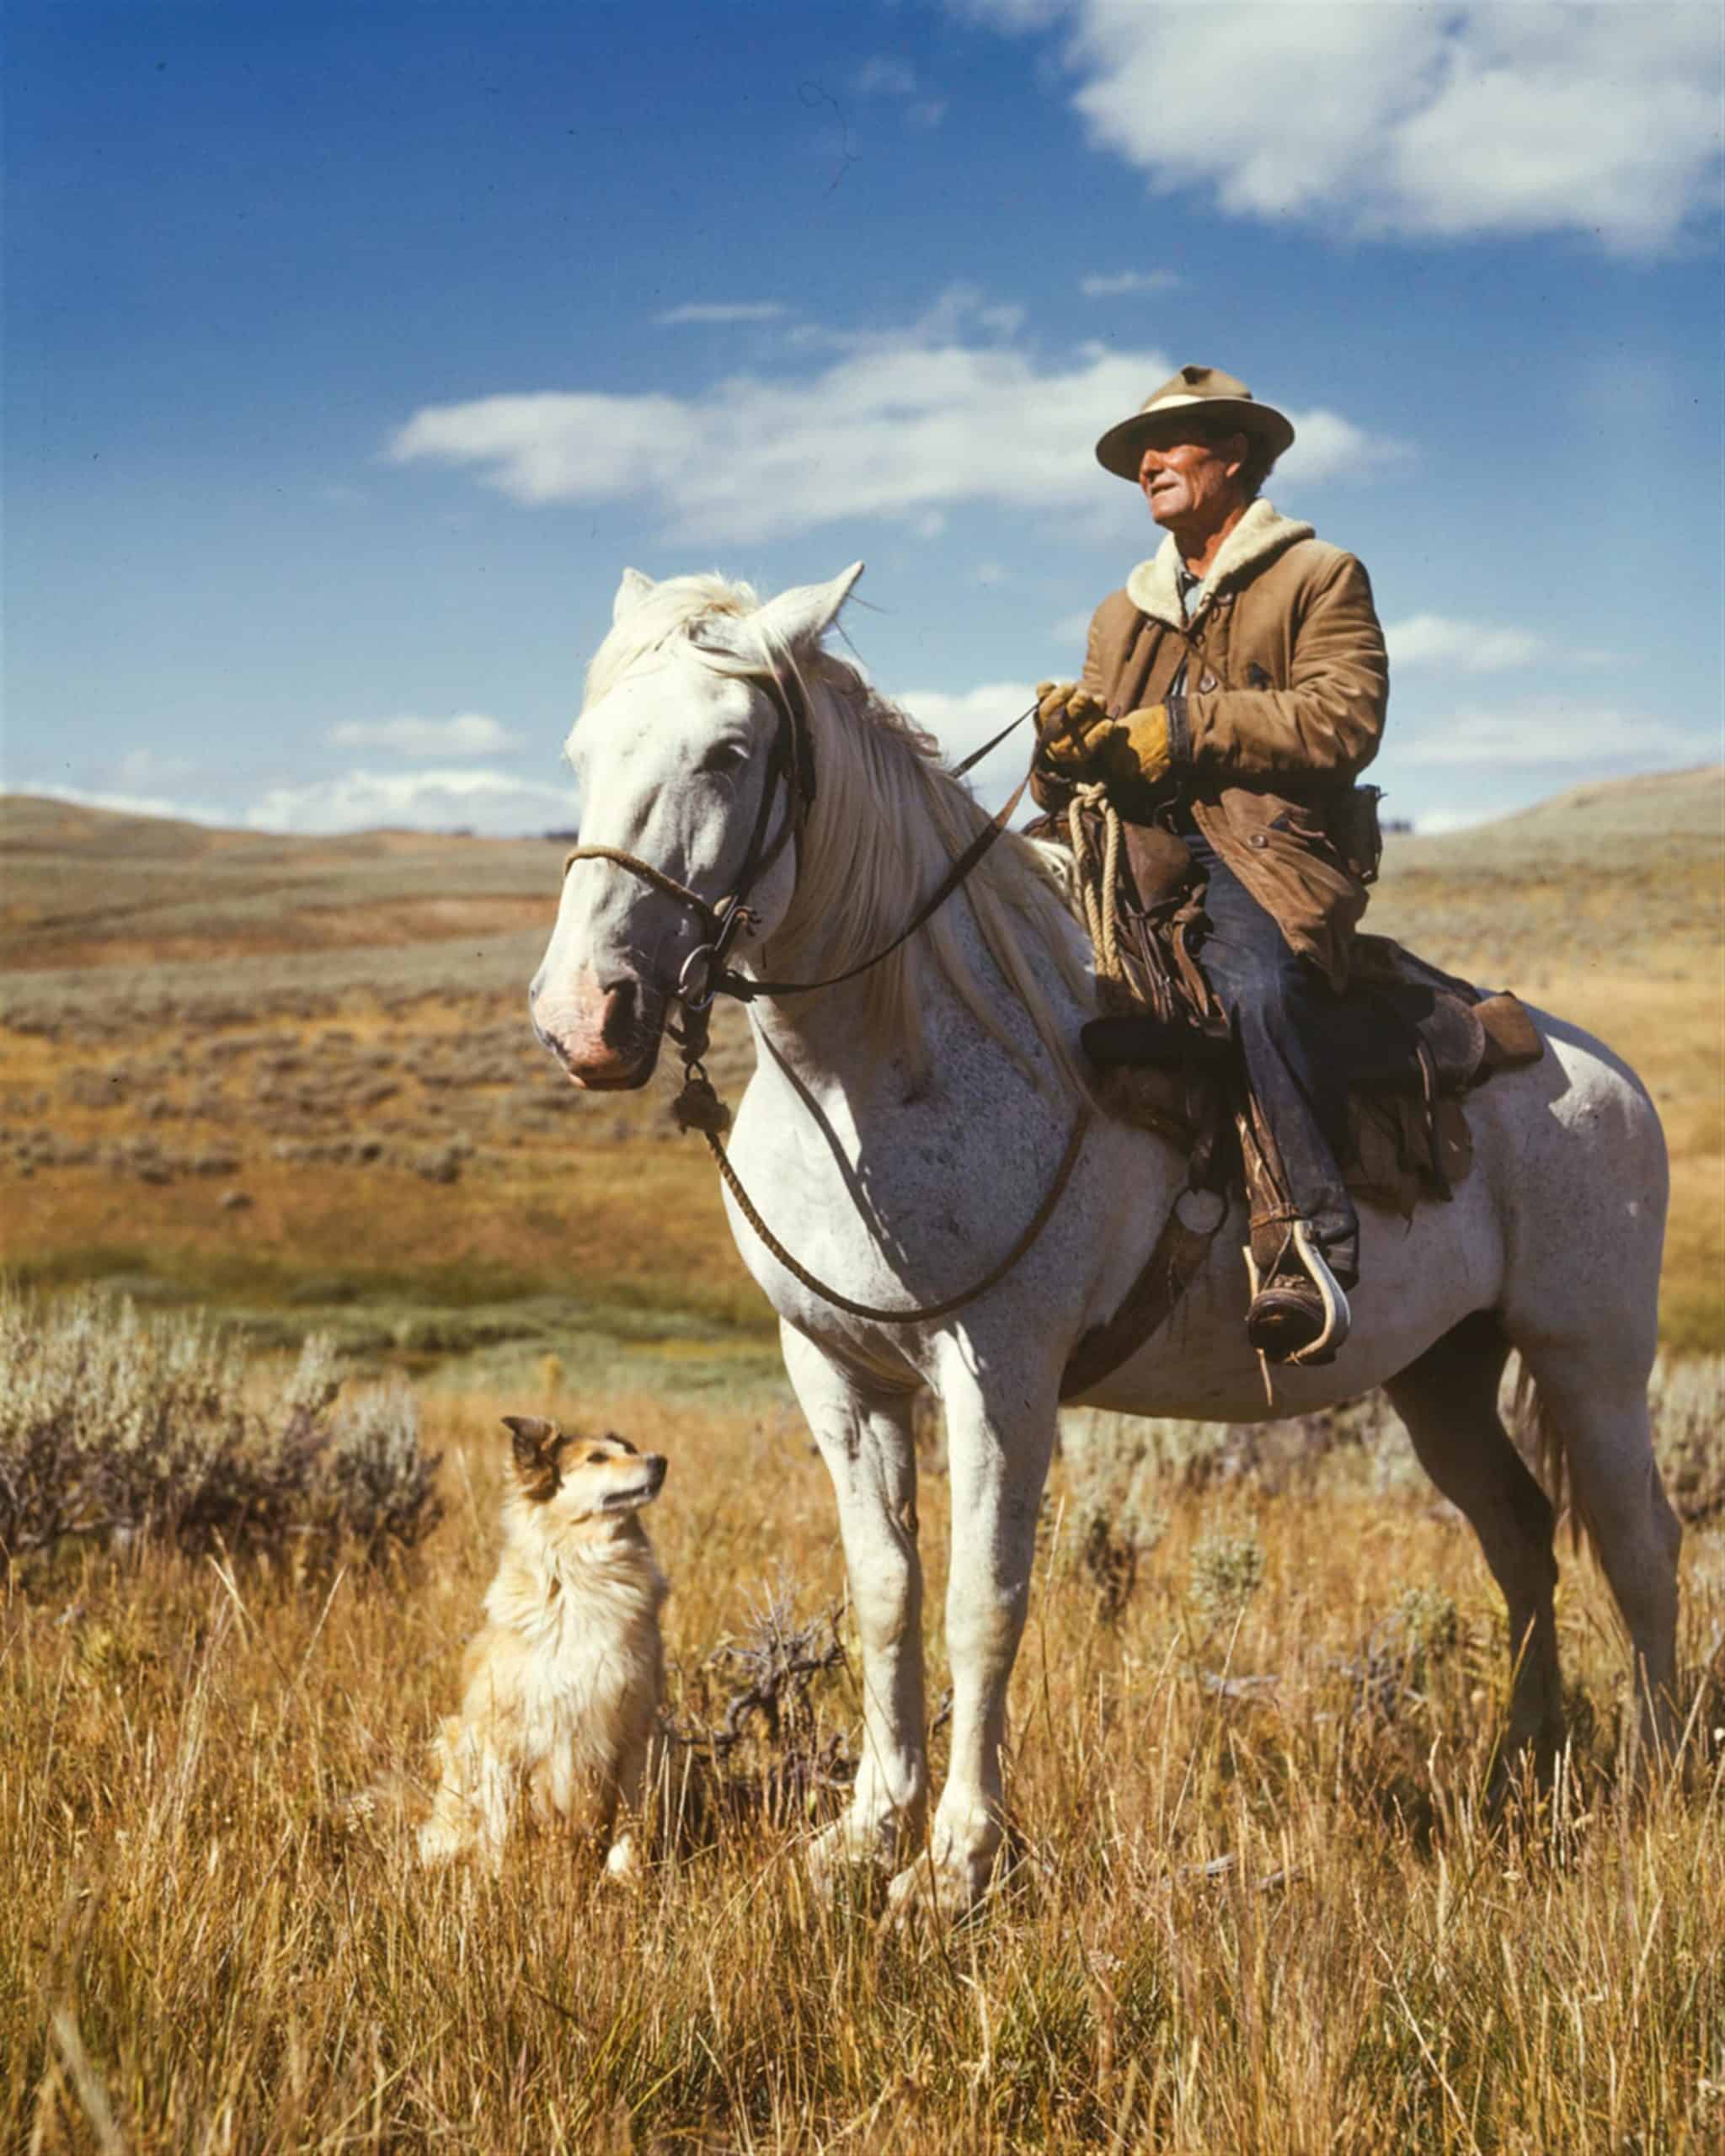 Canva - Farmer Riding a Horse with a Dog